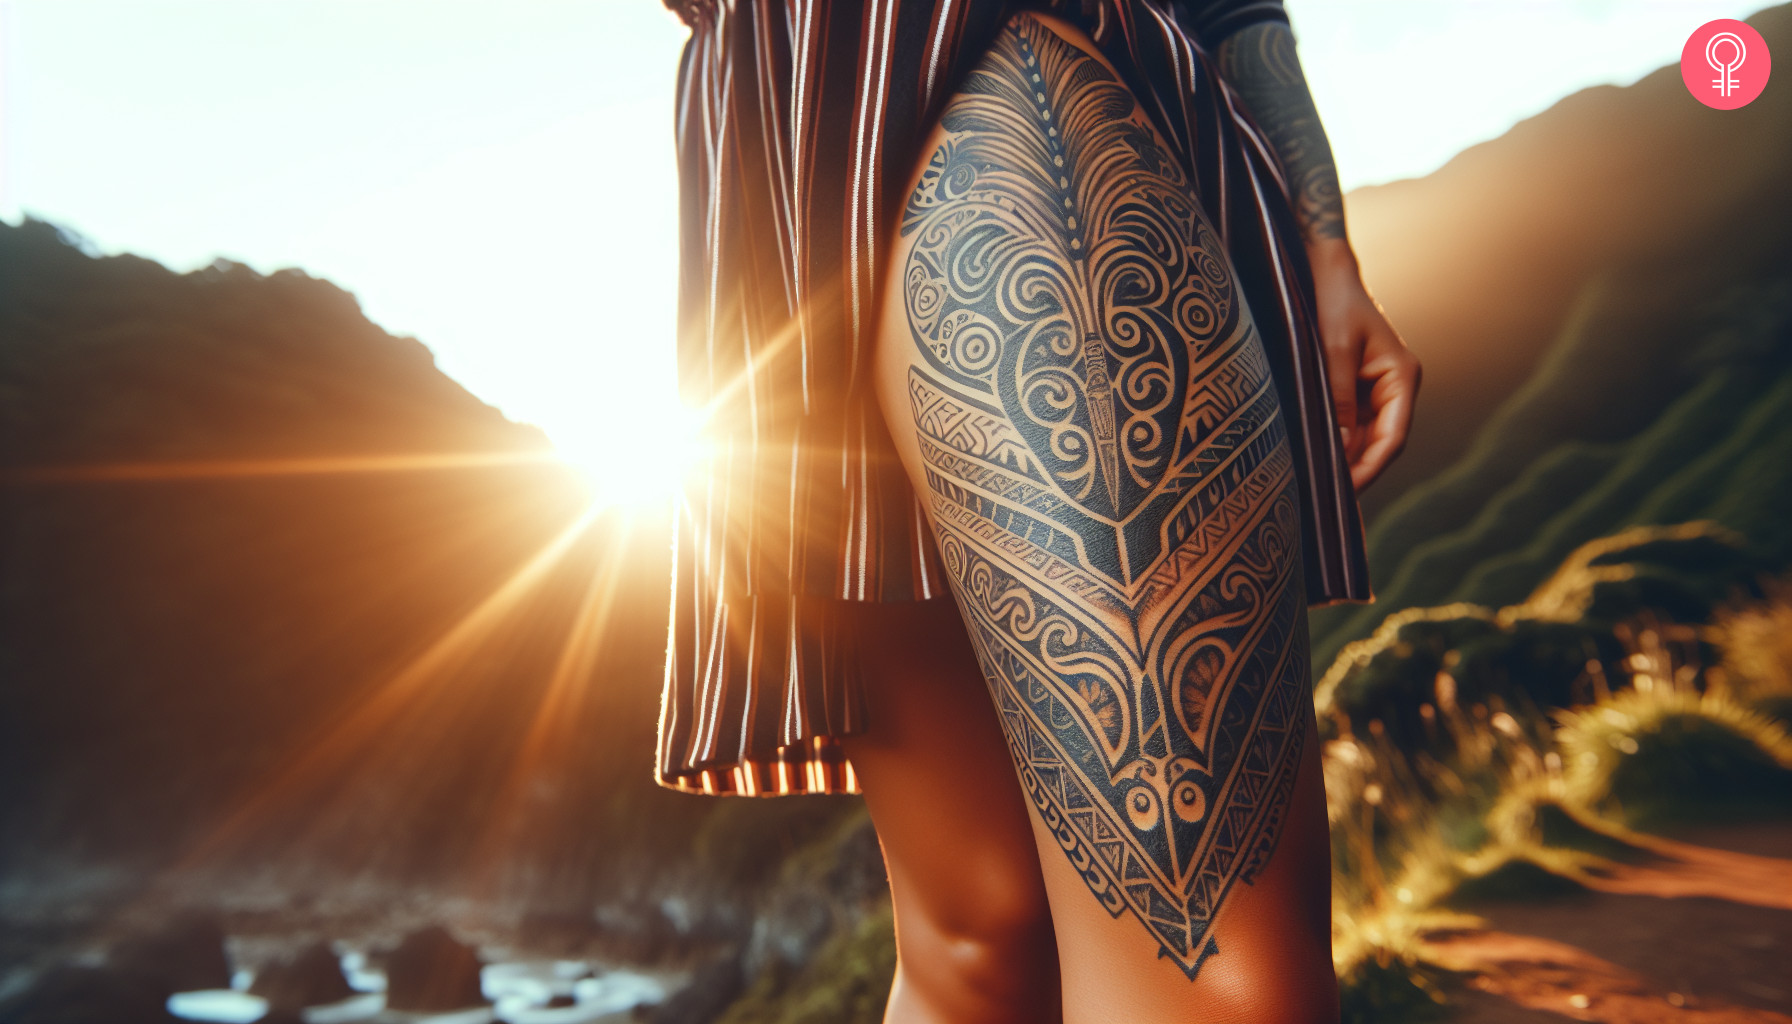 Maori tattoo design on the thigh of a girl